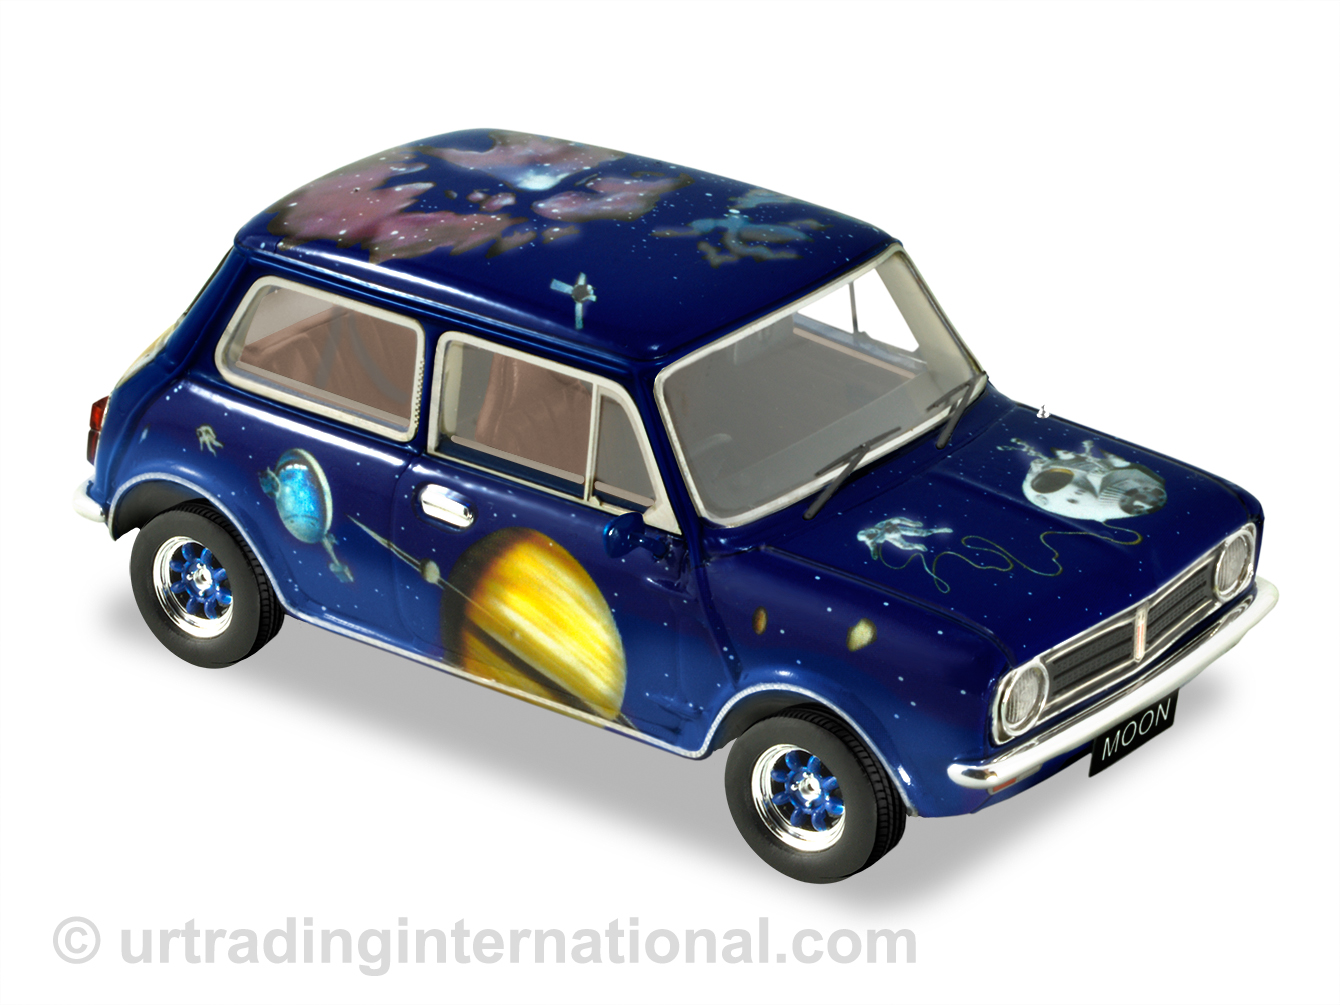 1976 Leyland Moon Mini – Blue